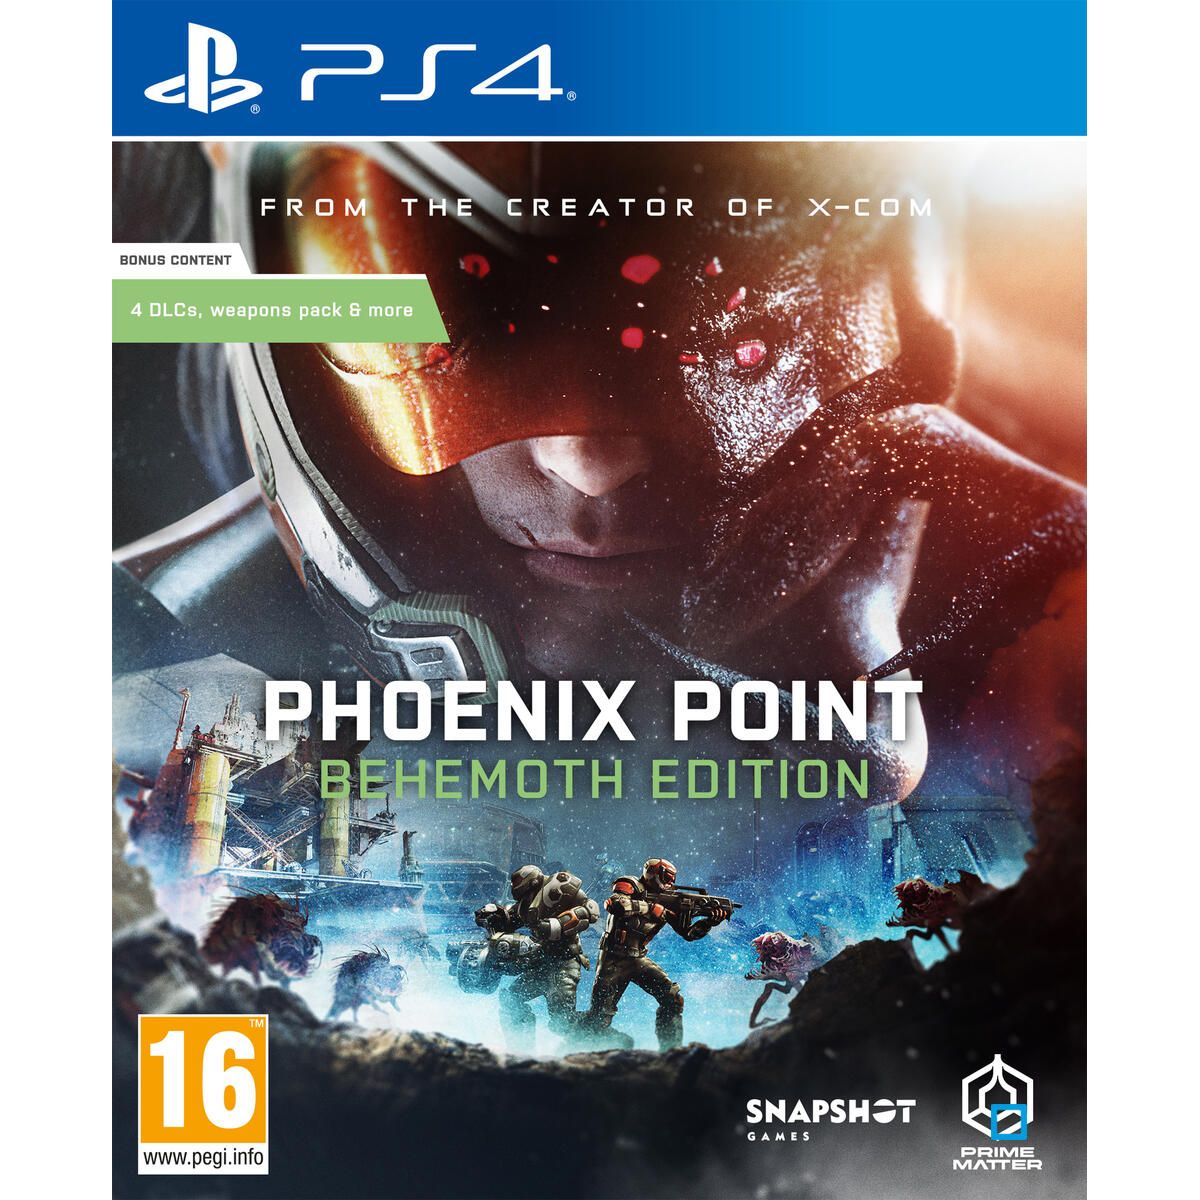 download phoenix point behemoth edition ps4